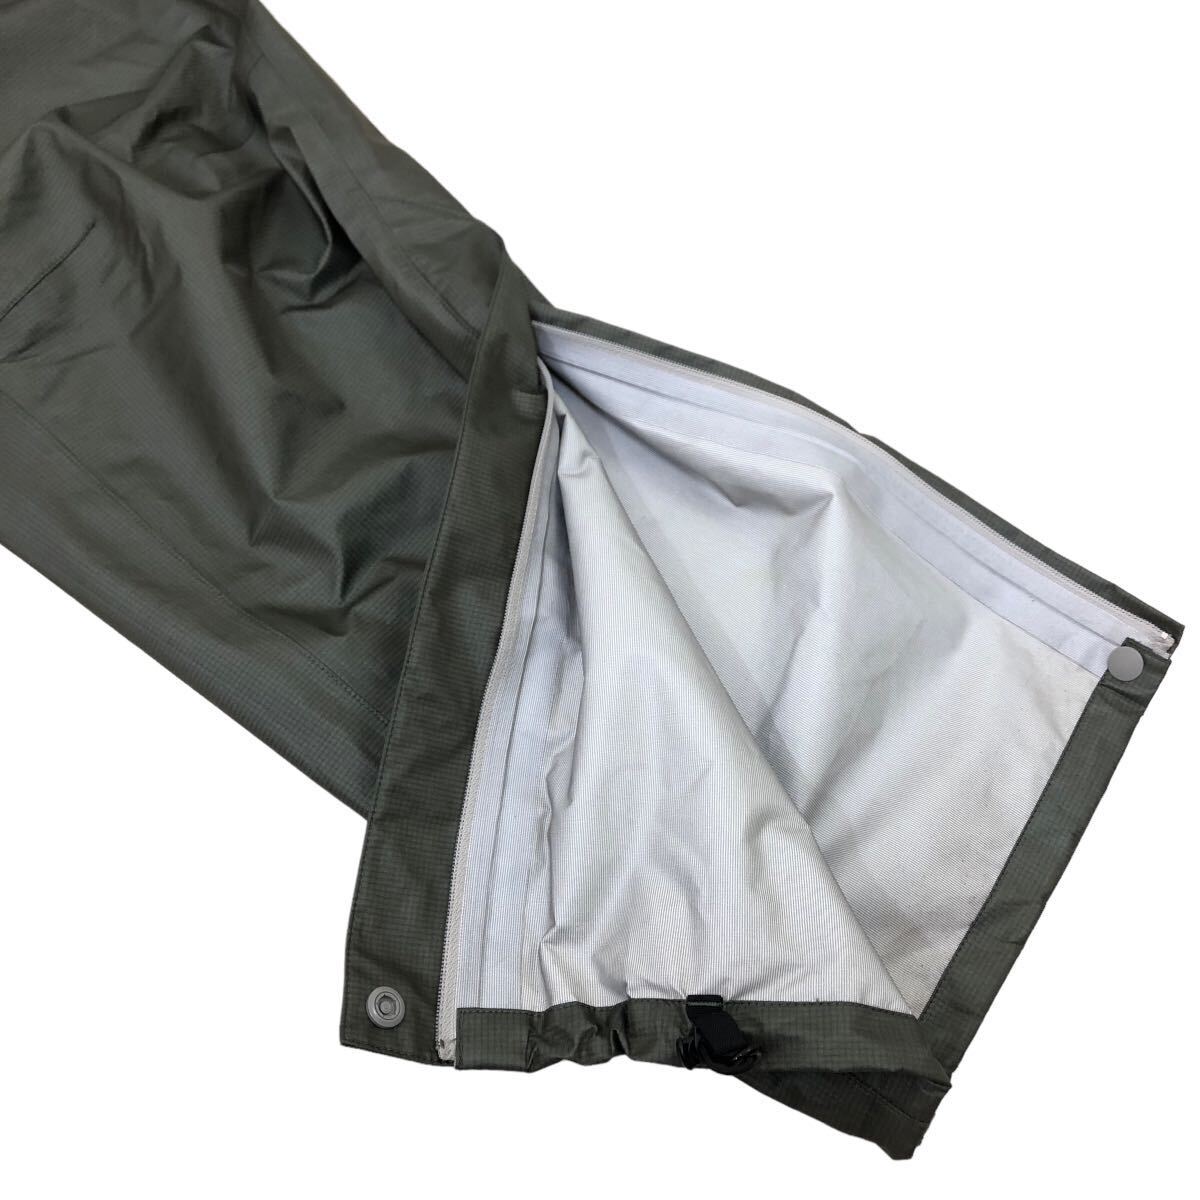 Nm209 GORE-TEX Performance Shell Gore-Tex Performance shell nylon pants pants bottoms outdoor khaki series lady's S